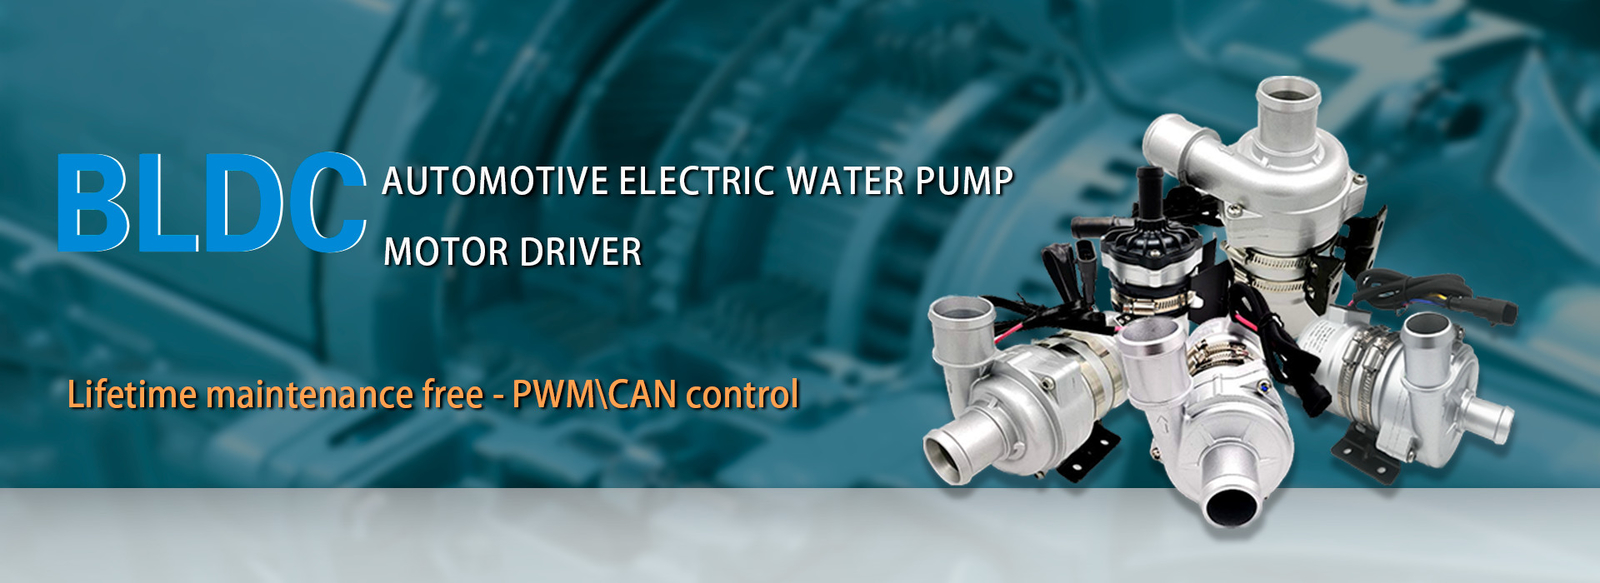 Automotive Electric Water Pump